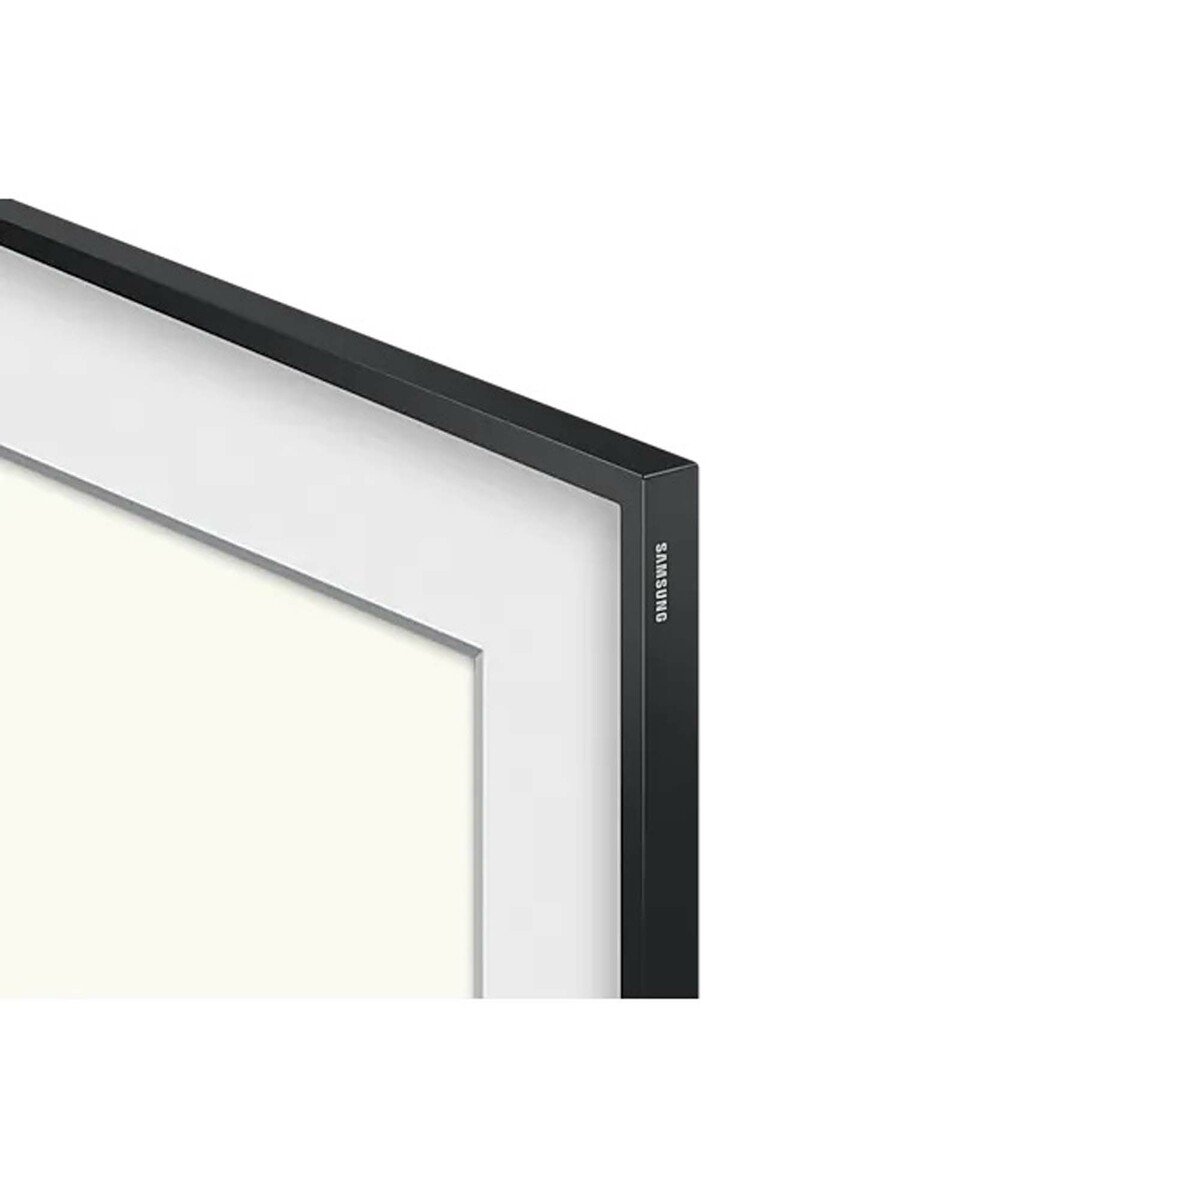 Samsung Frame Art Mode 4K Smart TV QA55LS03AAUXZN 55 inch